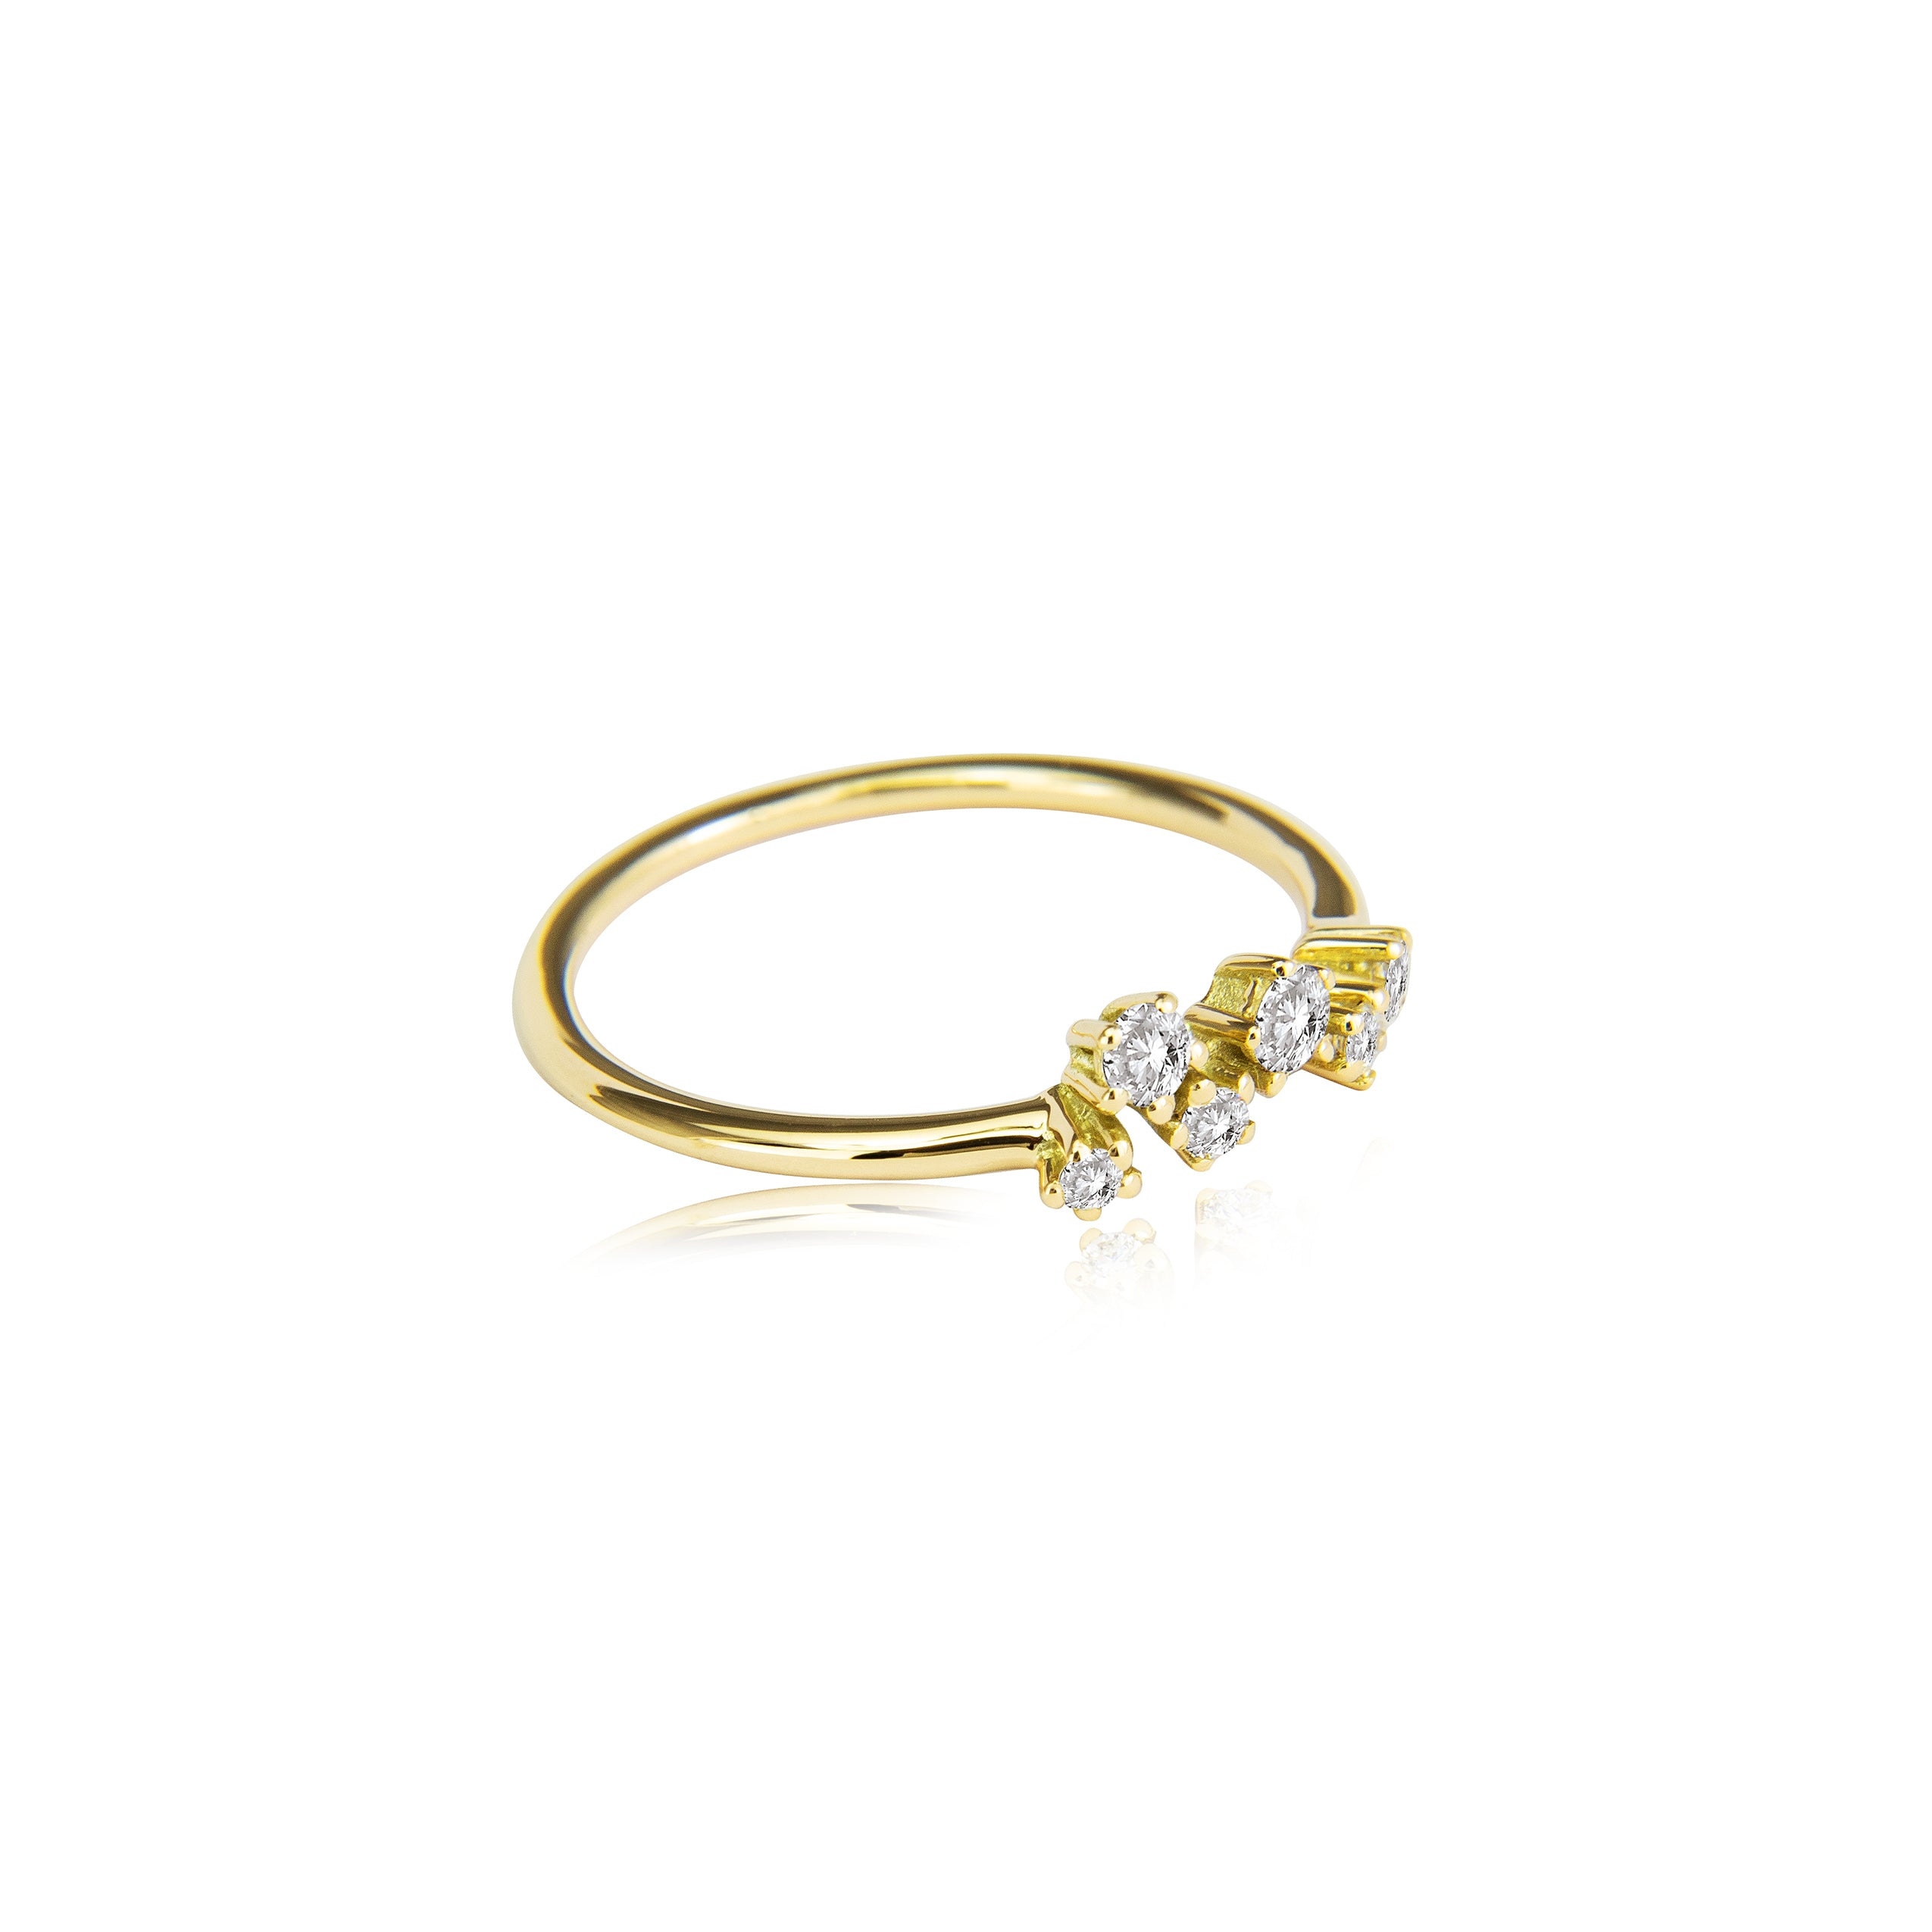 Sparkle ring "medium" in 585/- gold with 6 brilliant-cut diamonds